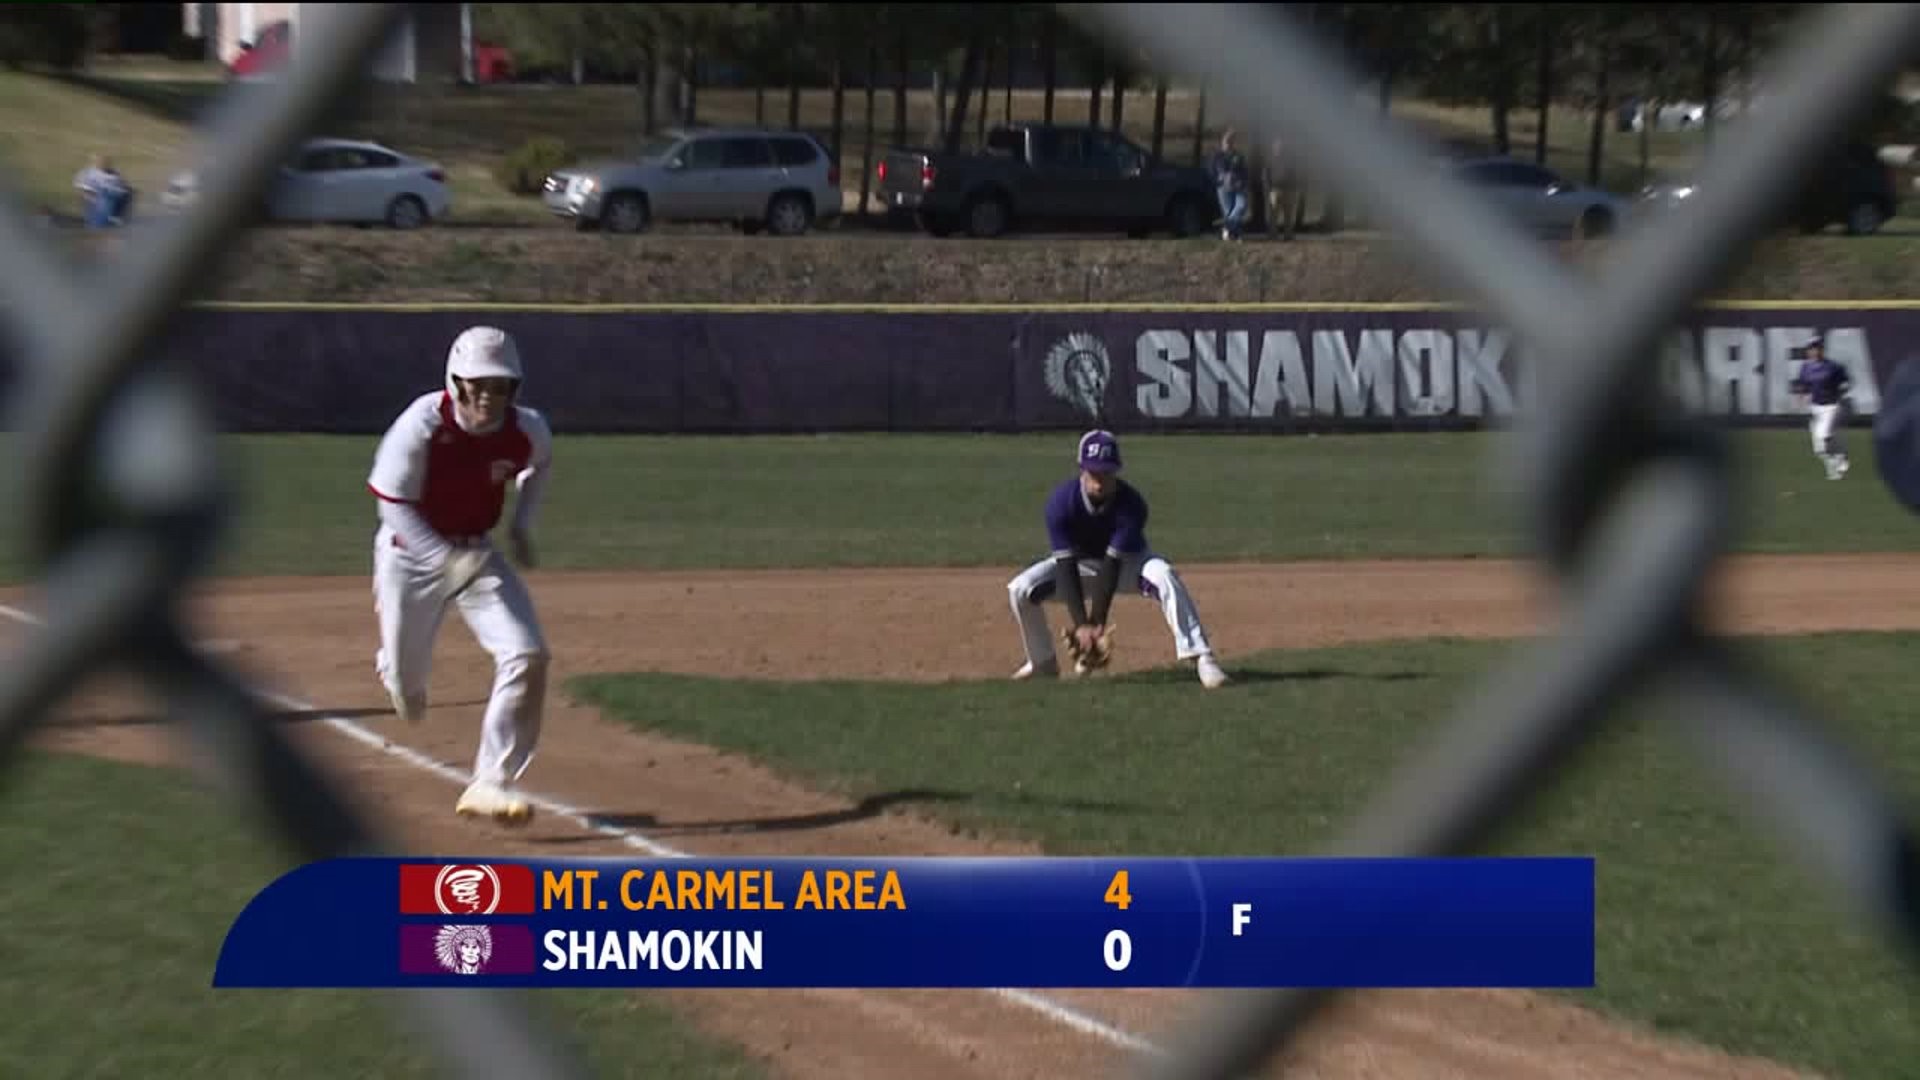 Mt. Carmel Area vs Shamokin baseball